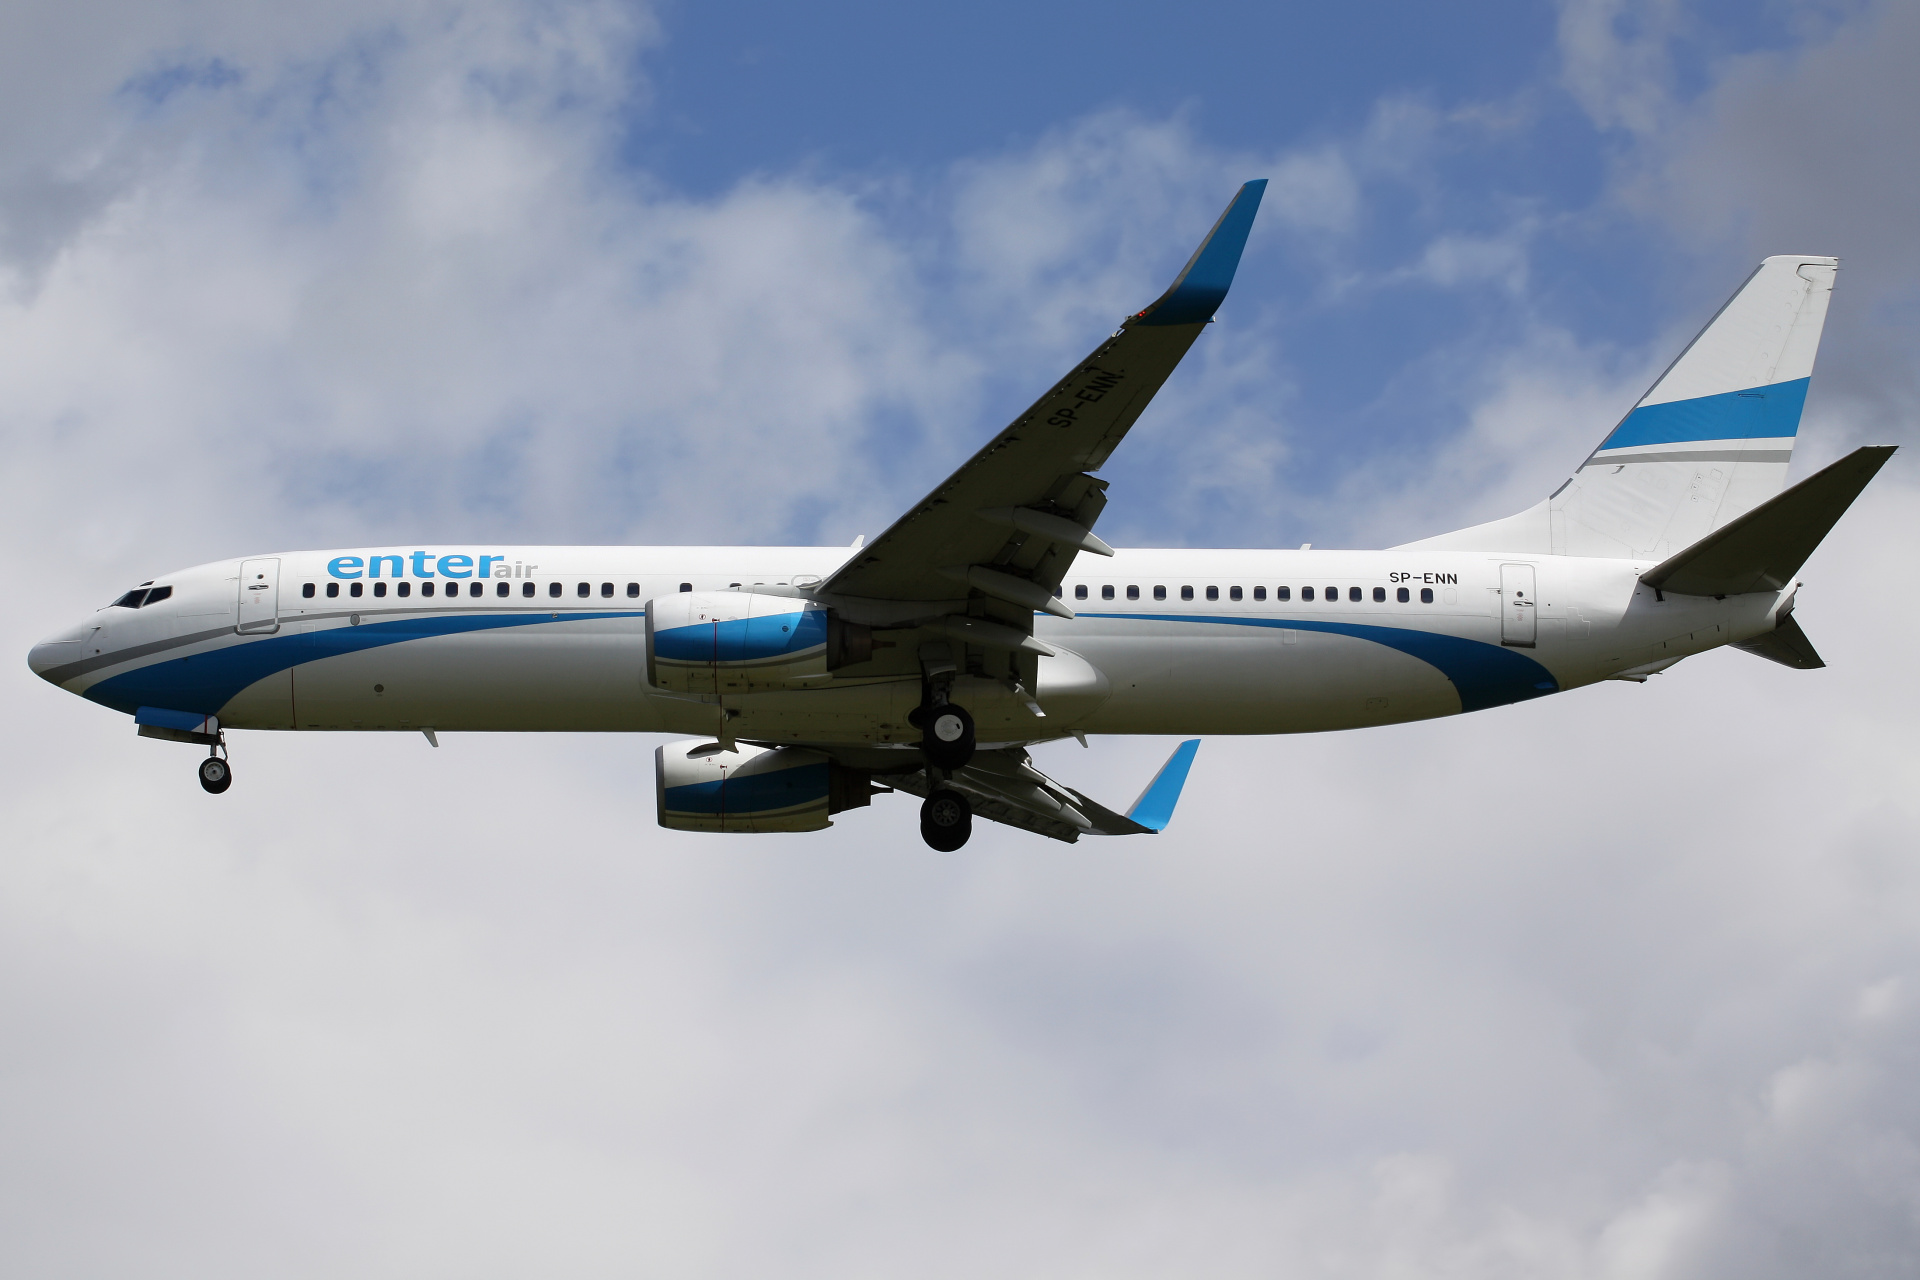 SP-ENN (Aircraft » EPWA Spotting » Boeing 737-800 » Enter Air)